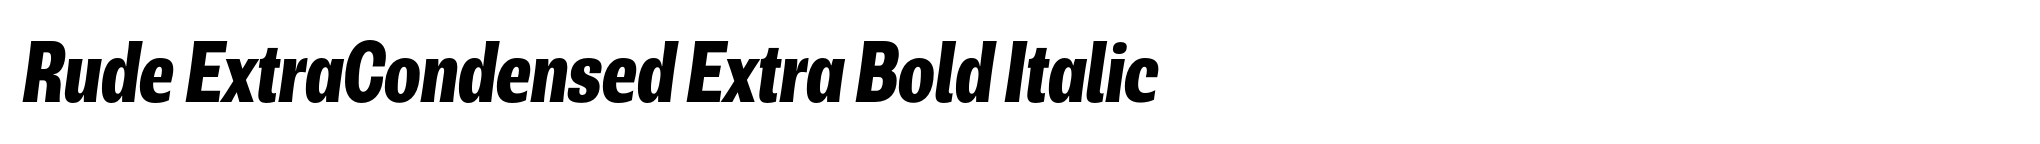 Rude ExtraCondensed Extra Bold Italic image